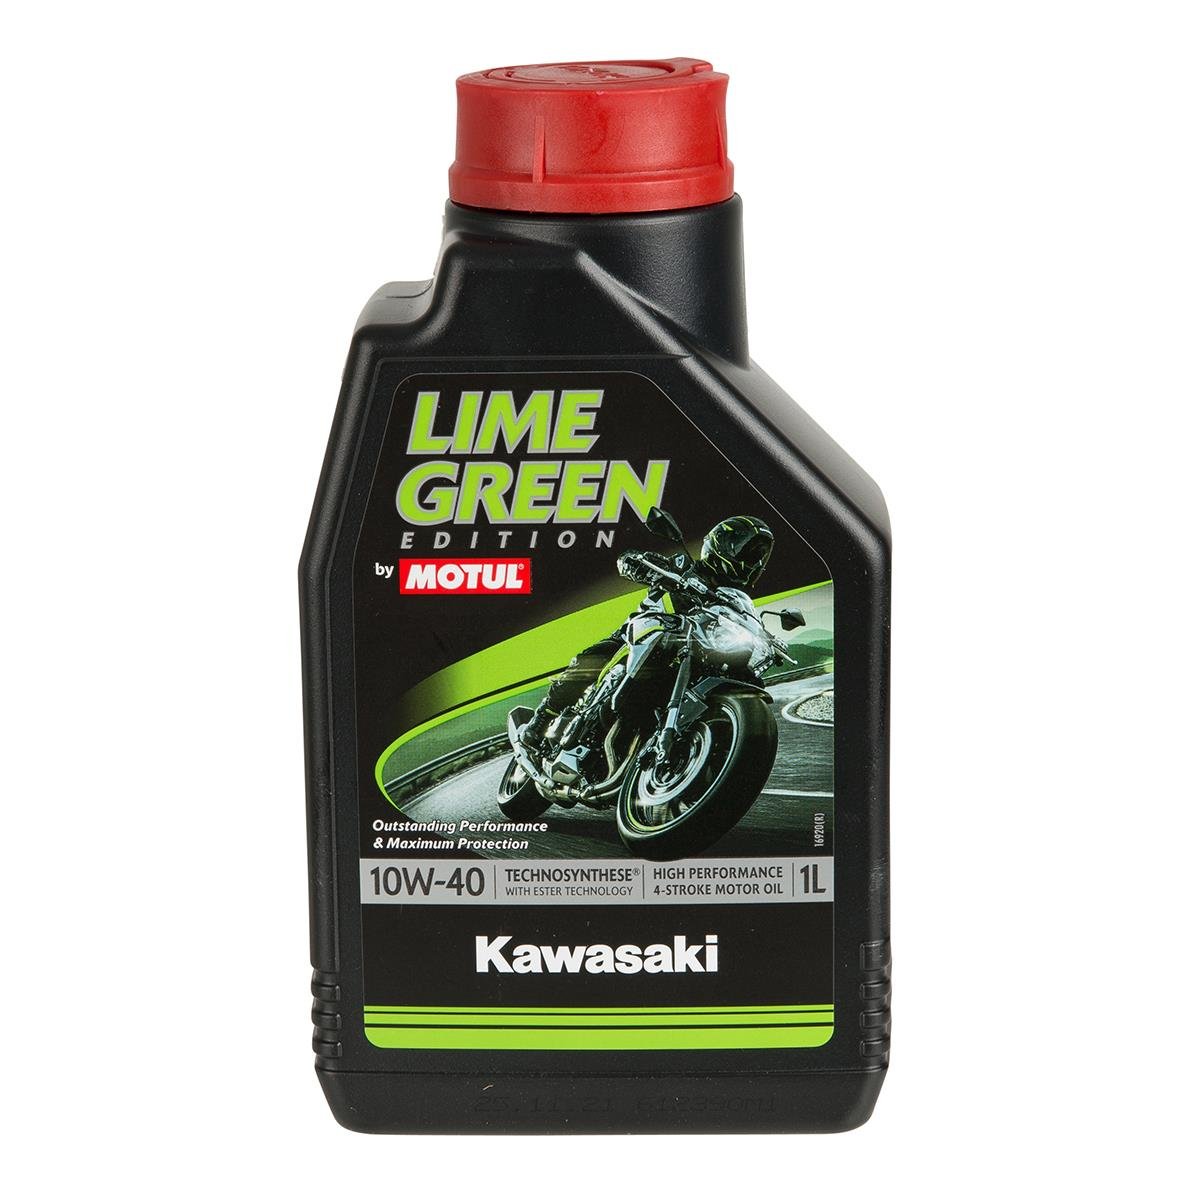 Motul Olio Motore Kawasaki Lime Green 10W40, 1 Litro